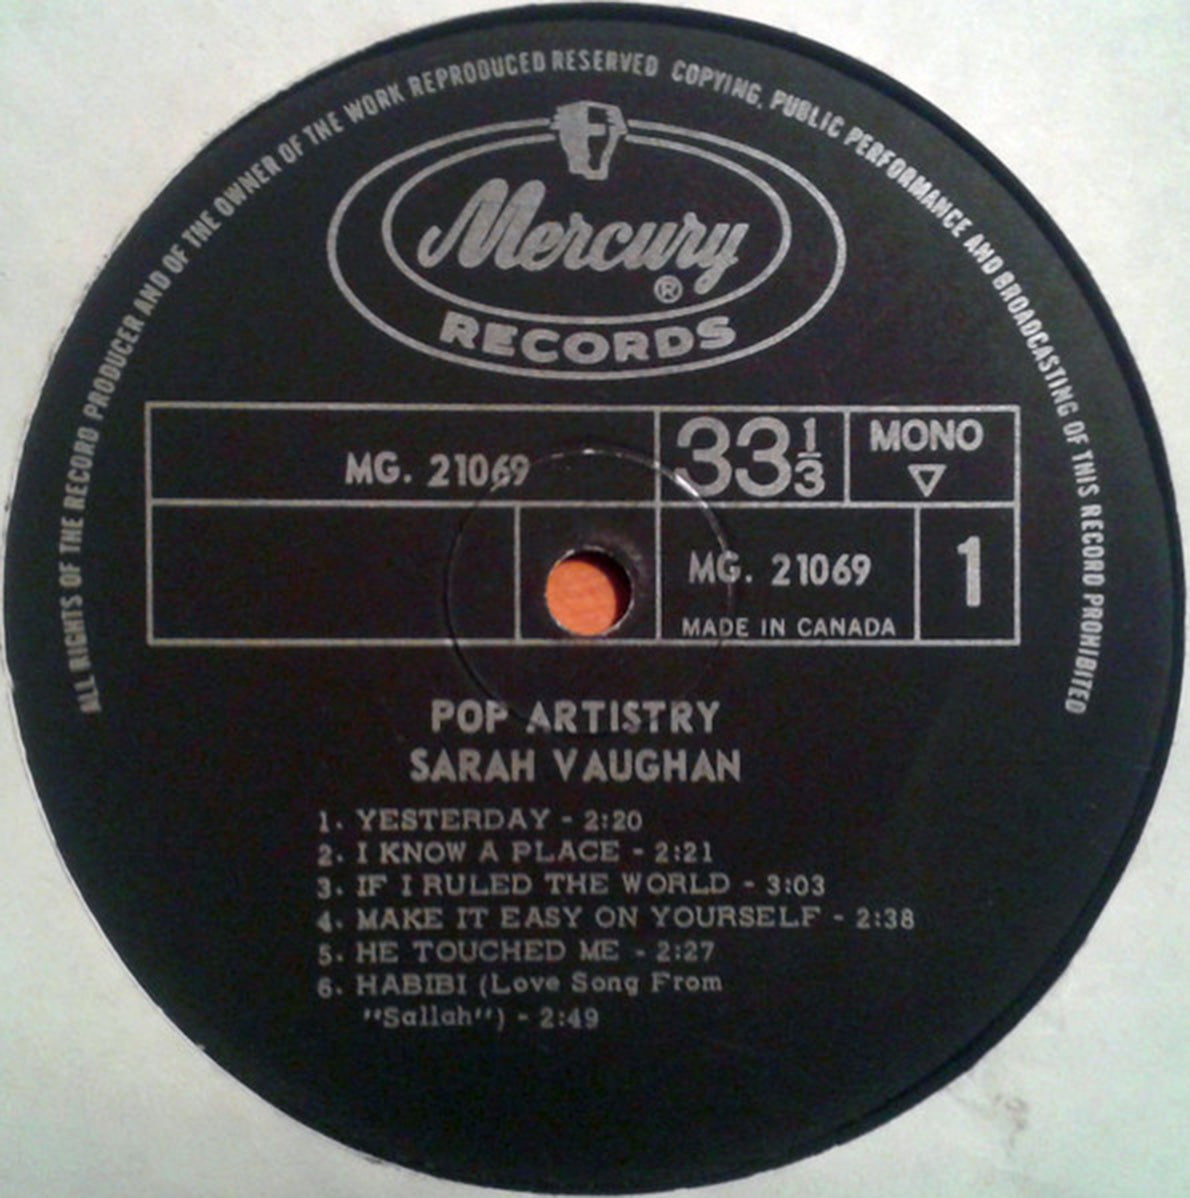 Sarah Vaughan – Pop Artistry - 1966 MONO